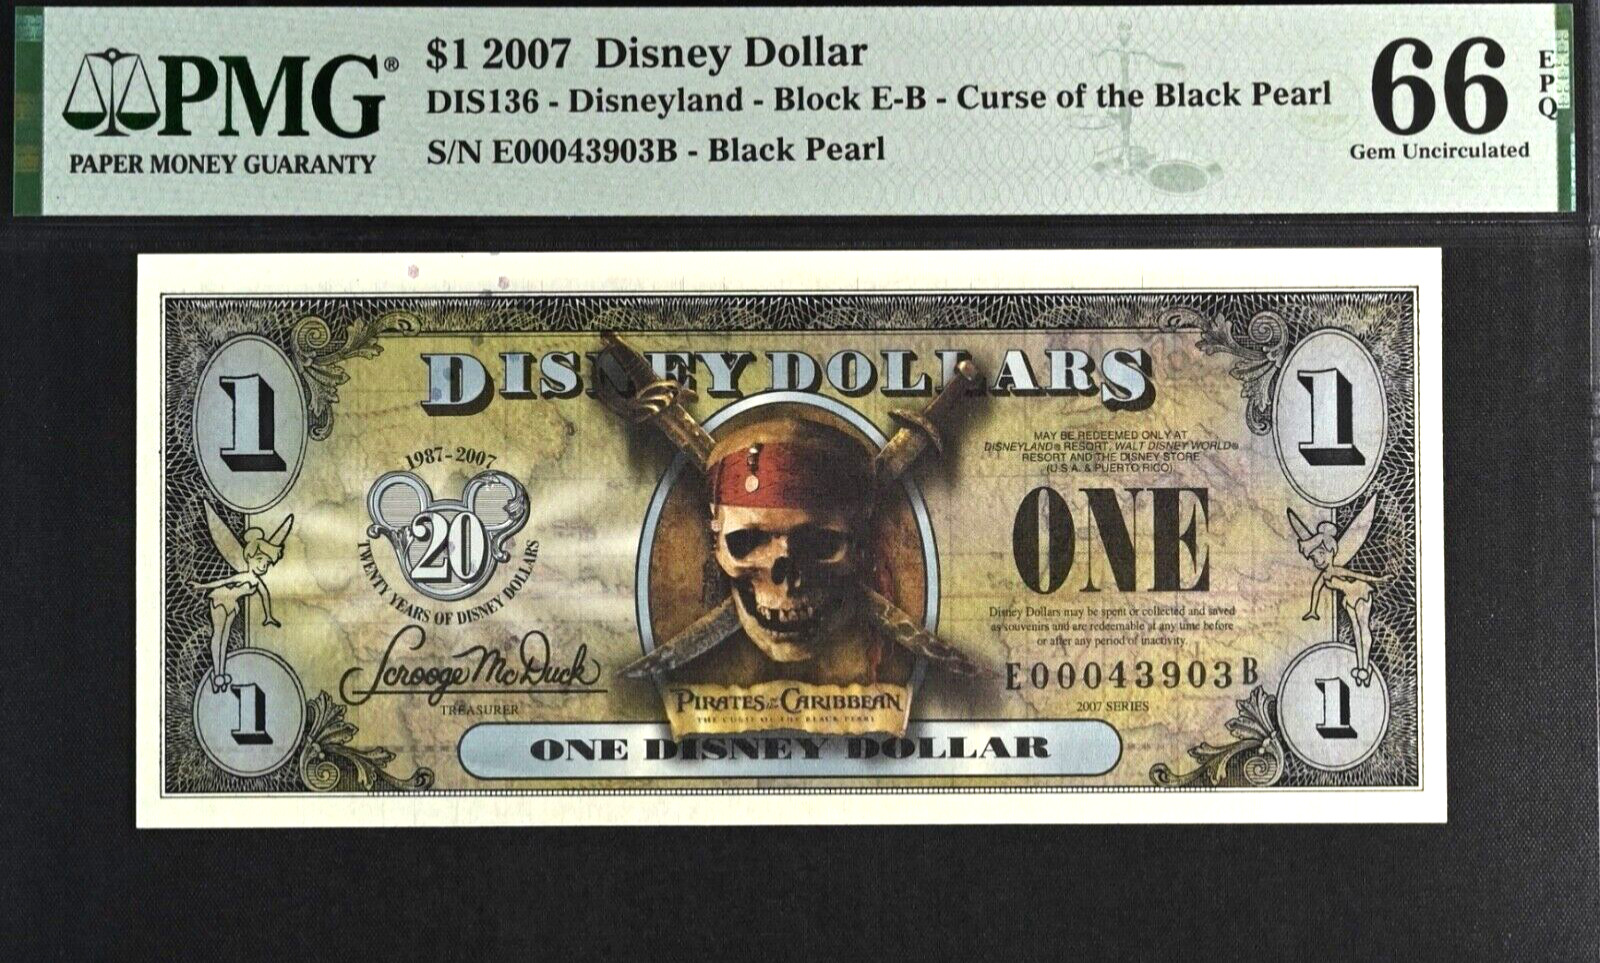 2011 & 2007 Complete Set of Disneyland Pirates of the Caribbean Disney Dollars